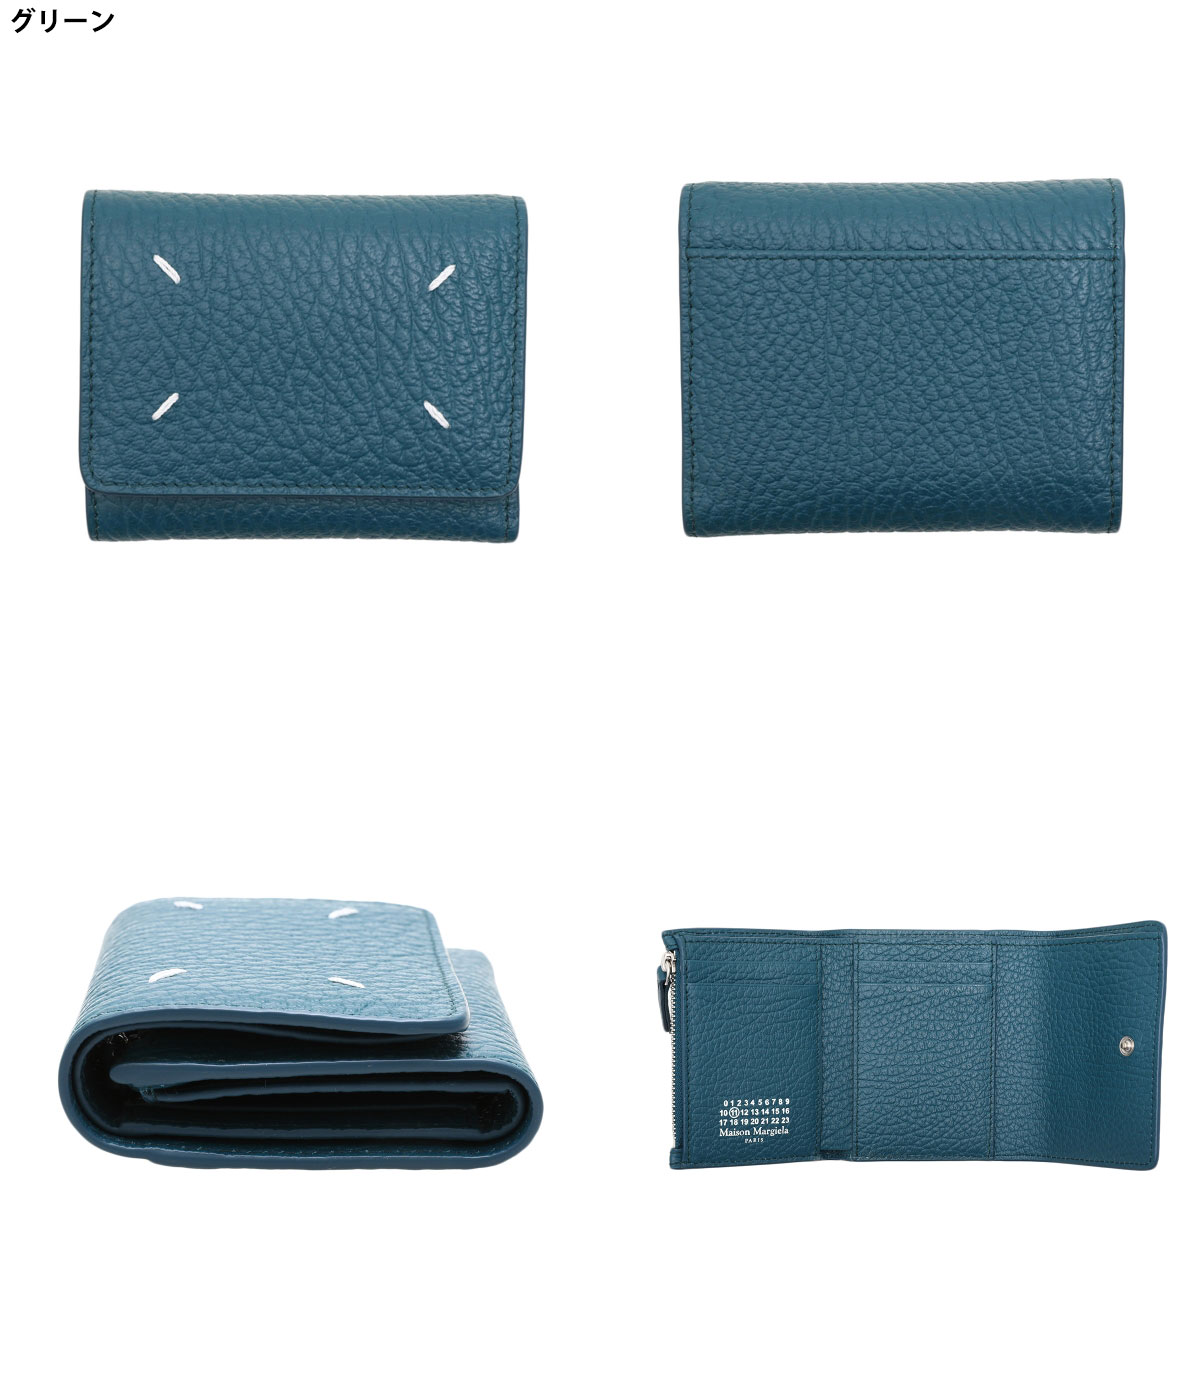 Maison Margiela / メゾン マルジェラ ： Zip Compact tri fold wallet